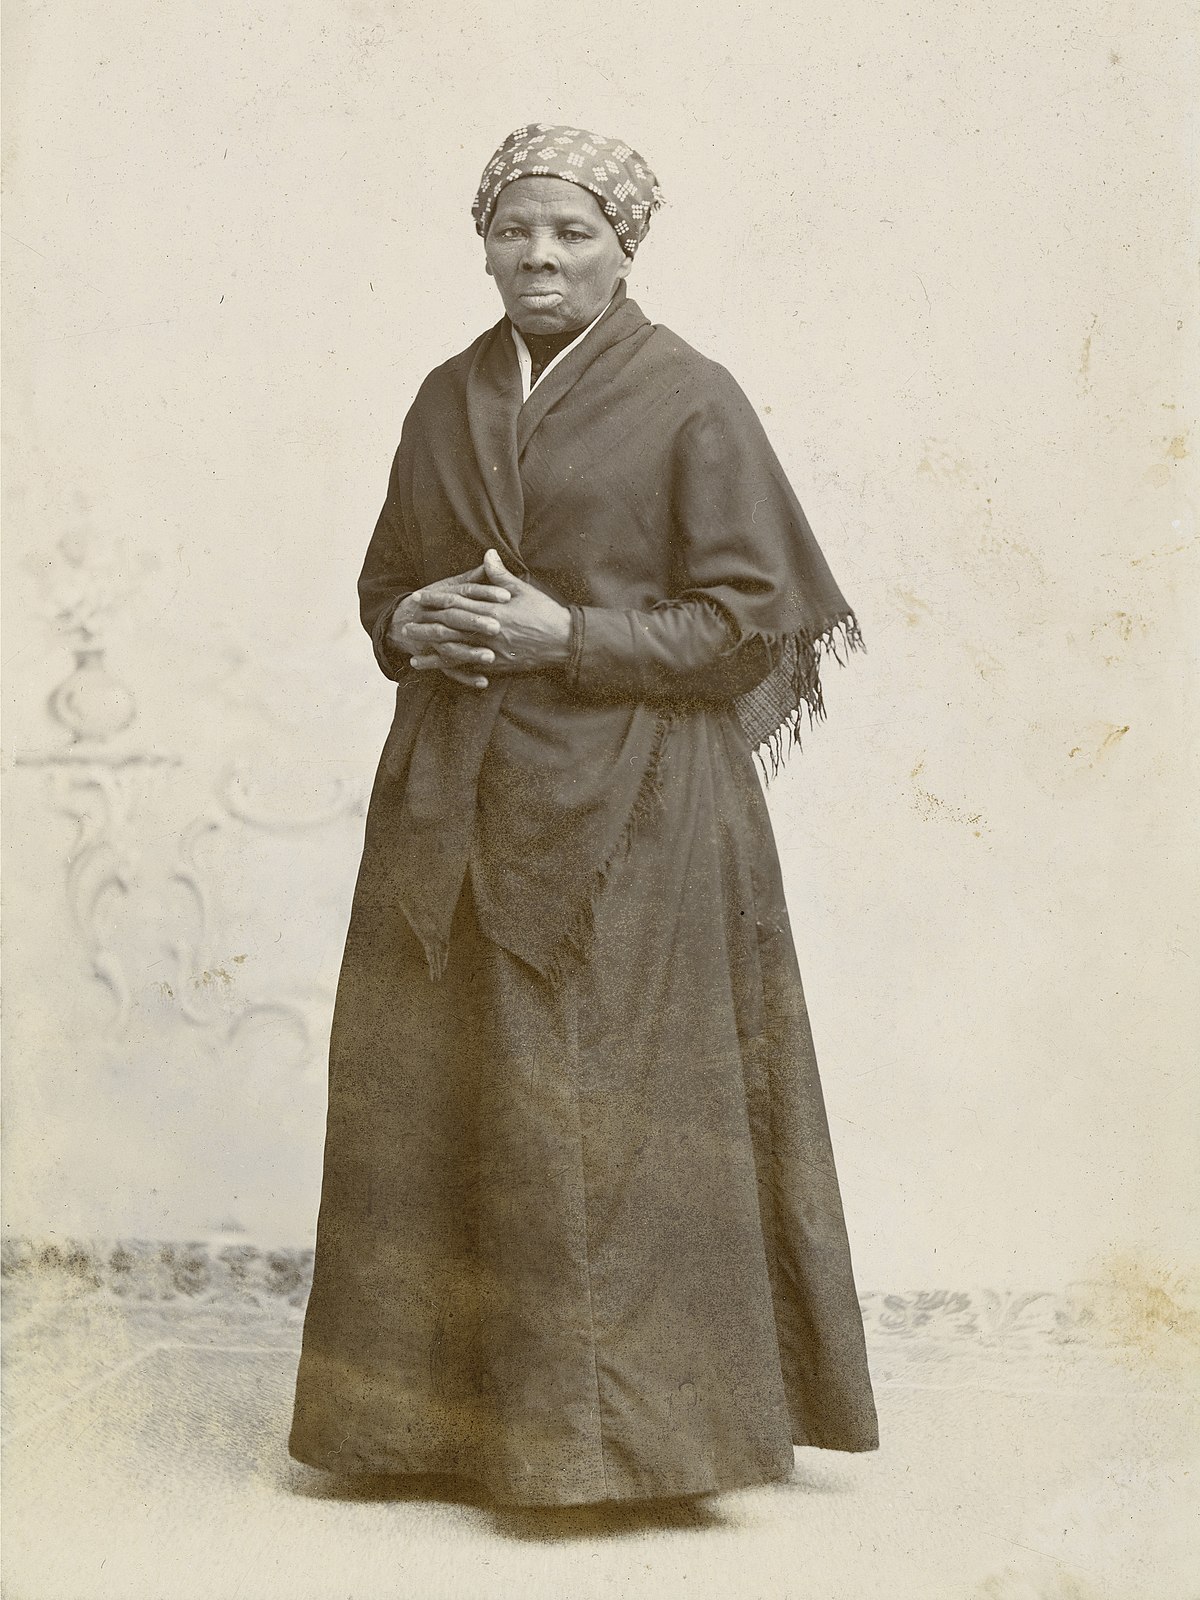 1930 Vintage Black Slave - Harriet Tubman - Wikipedia